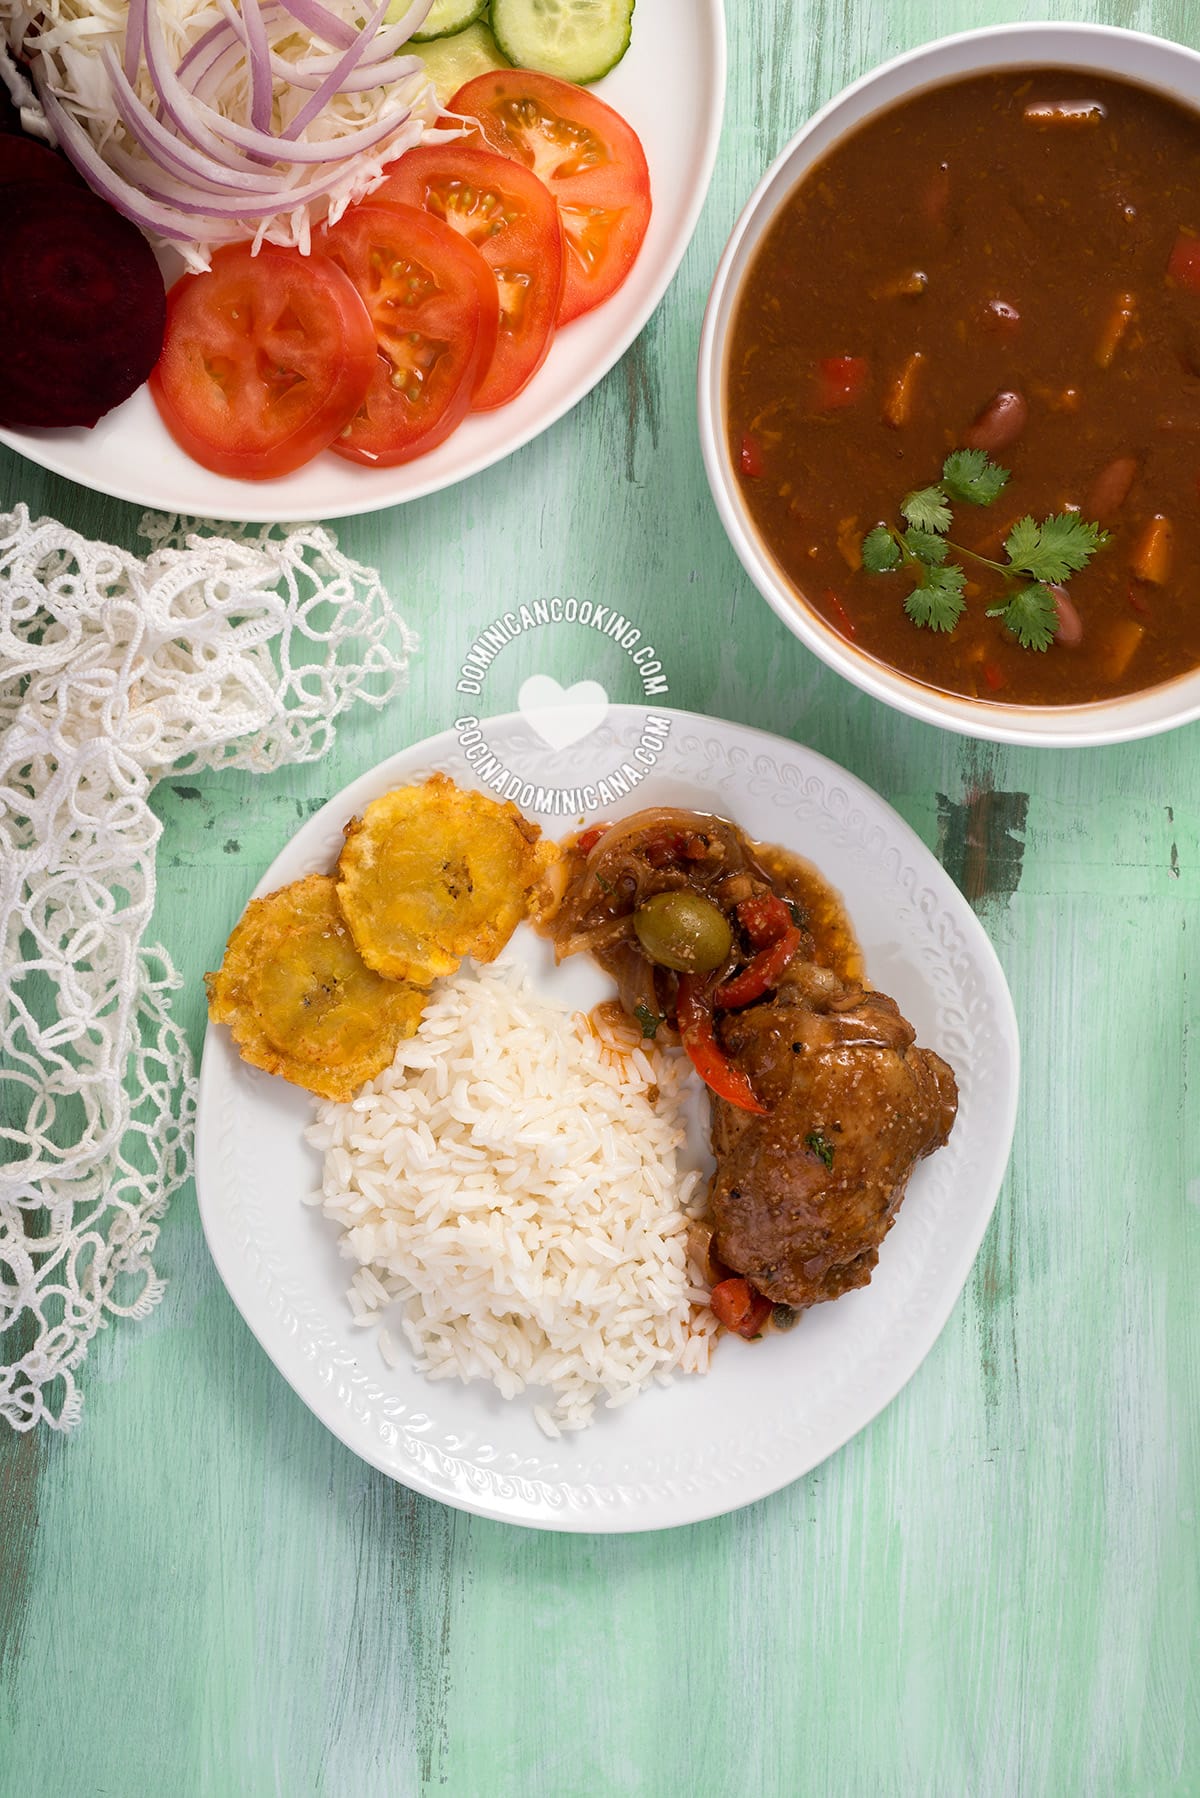 La bandera dominicana (rice, beans, meat and salad).